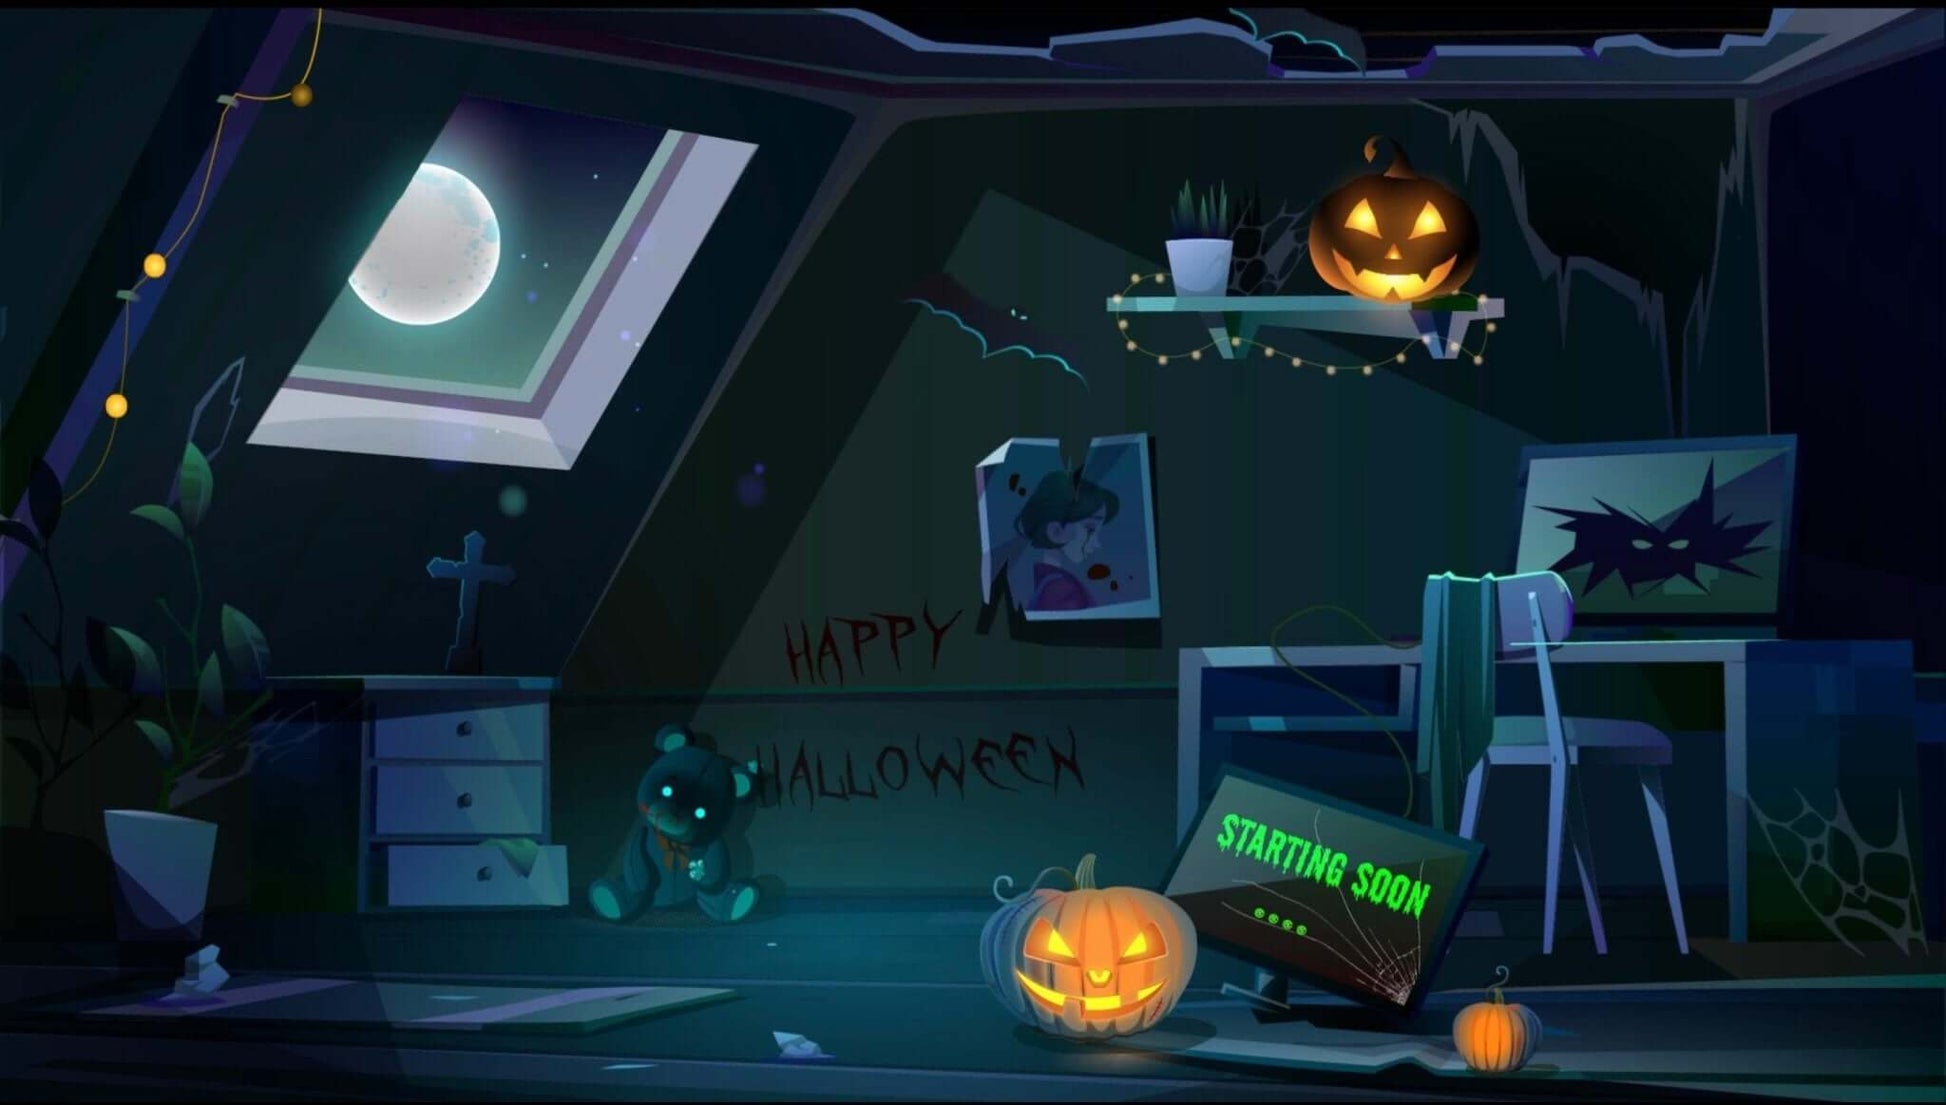 Animated Stream Screen Overlays Halloween Horror PC Setup Room - Overlay - Stream K-Arts